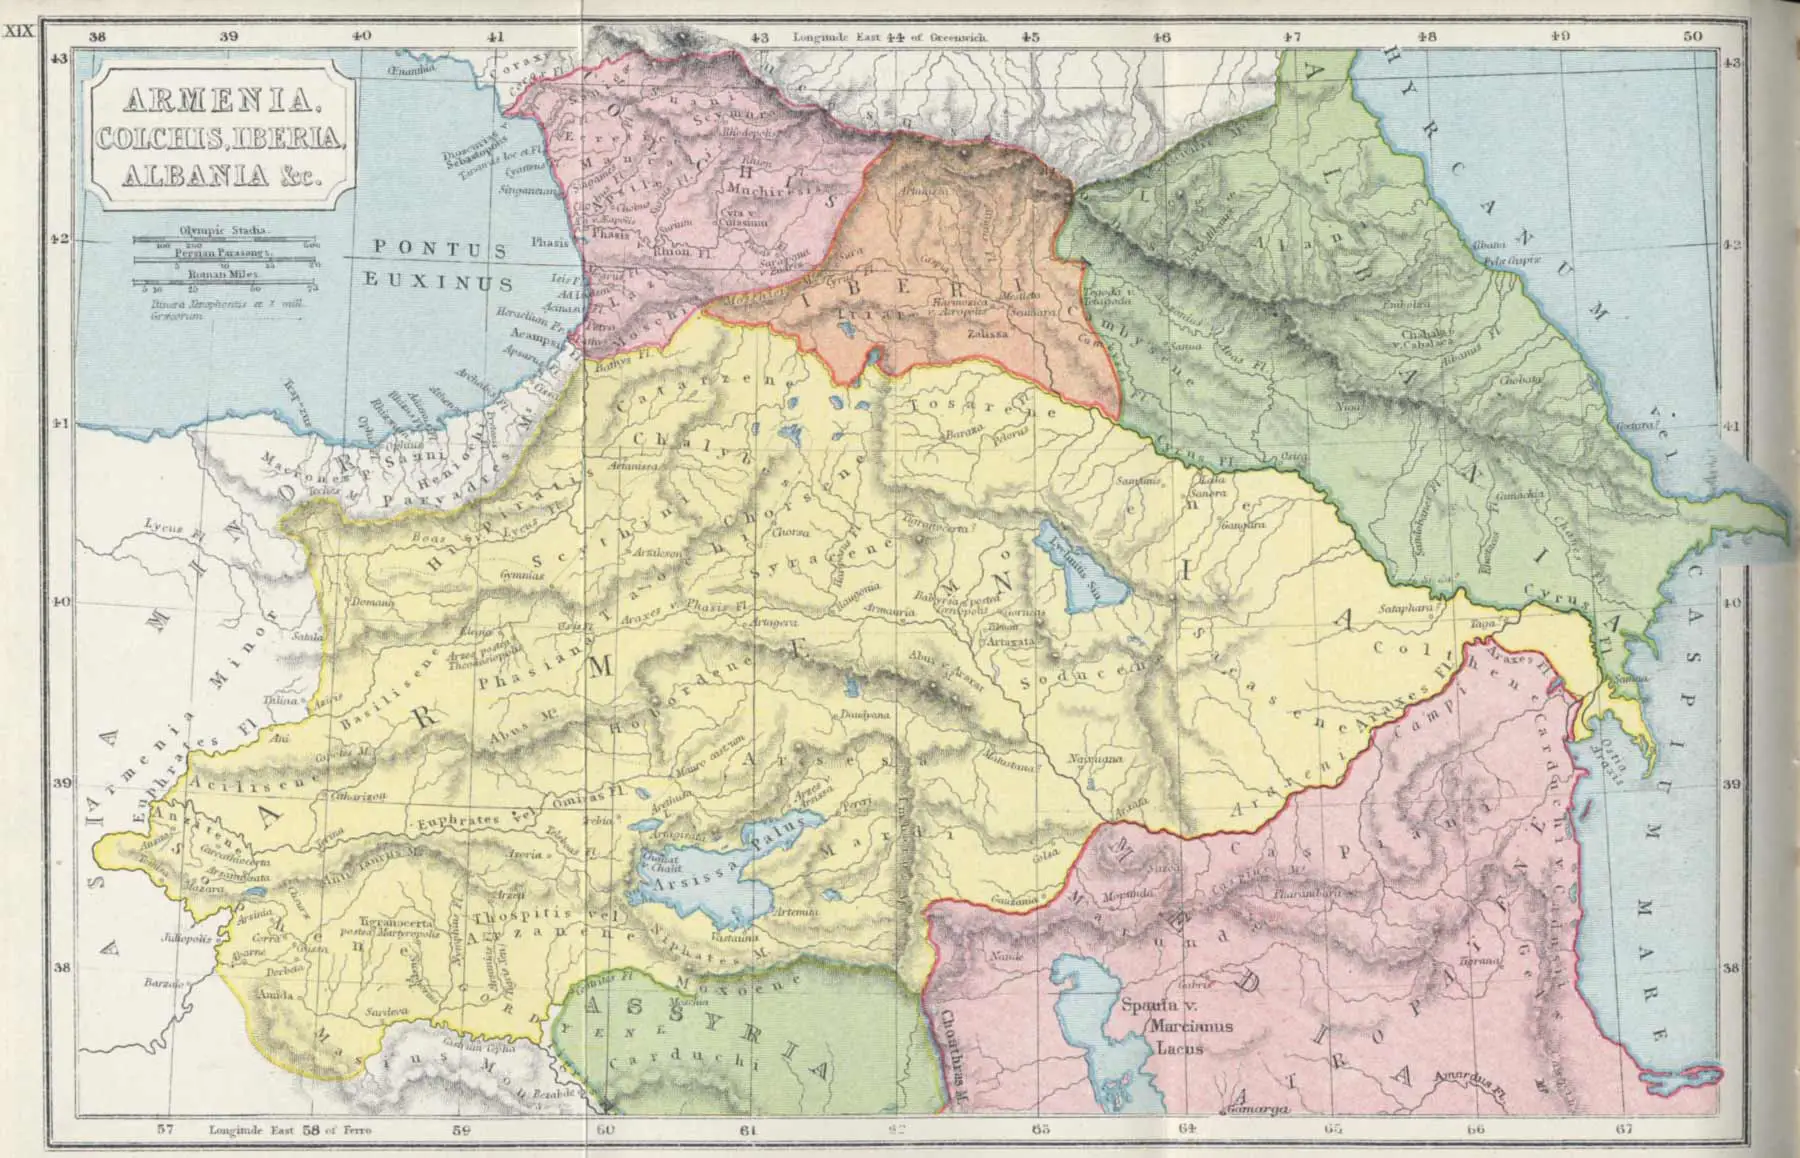 Armenia, Colchis, Iberia, Albania, Etc